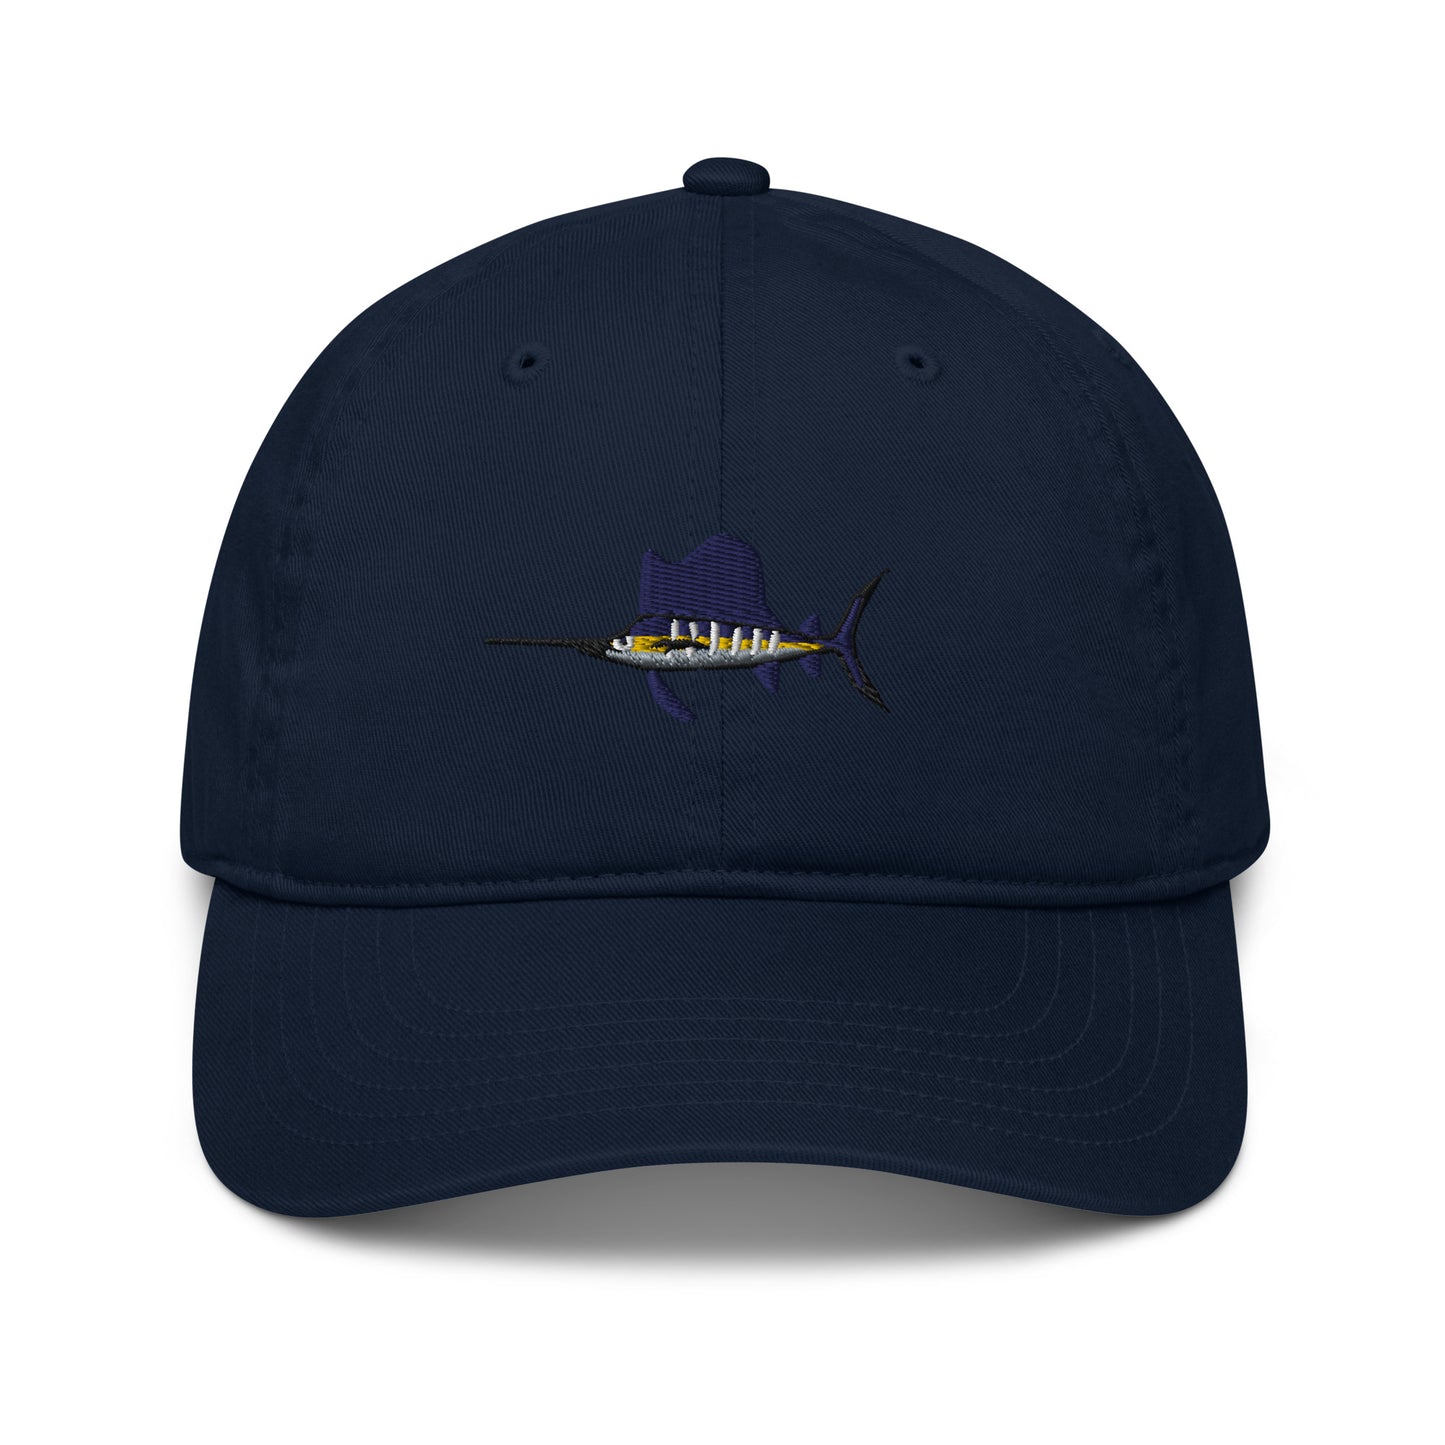 Sailfish Classic Hat